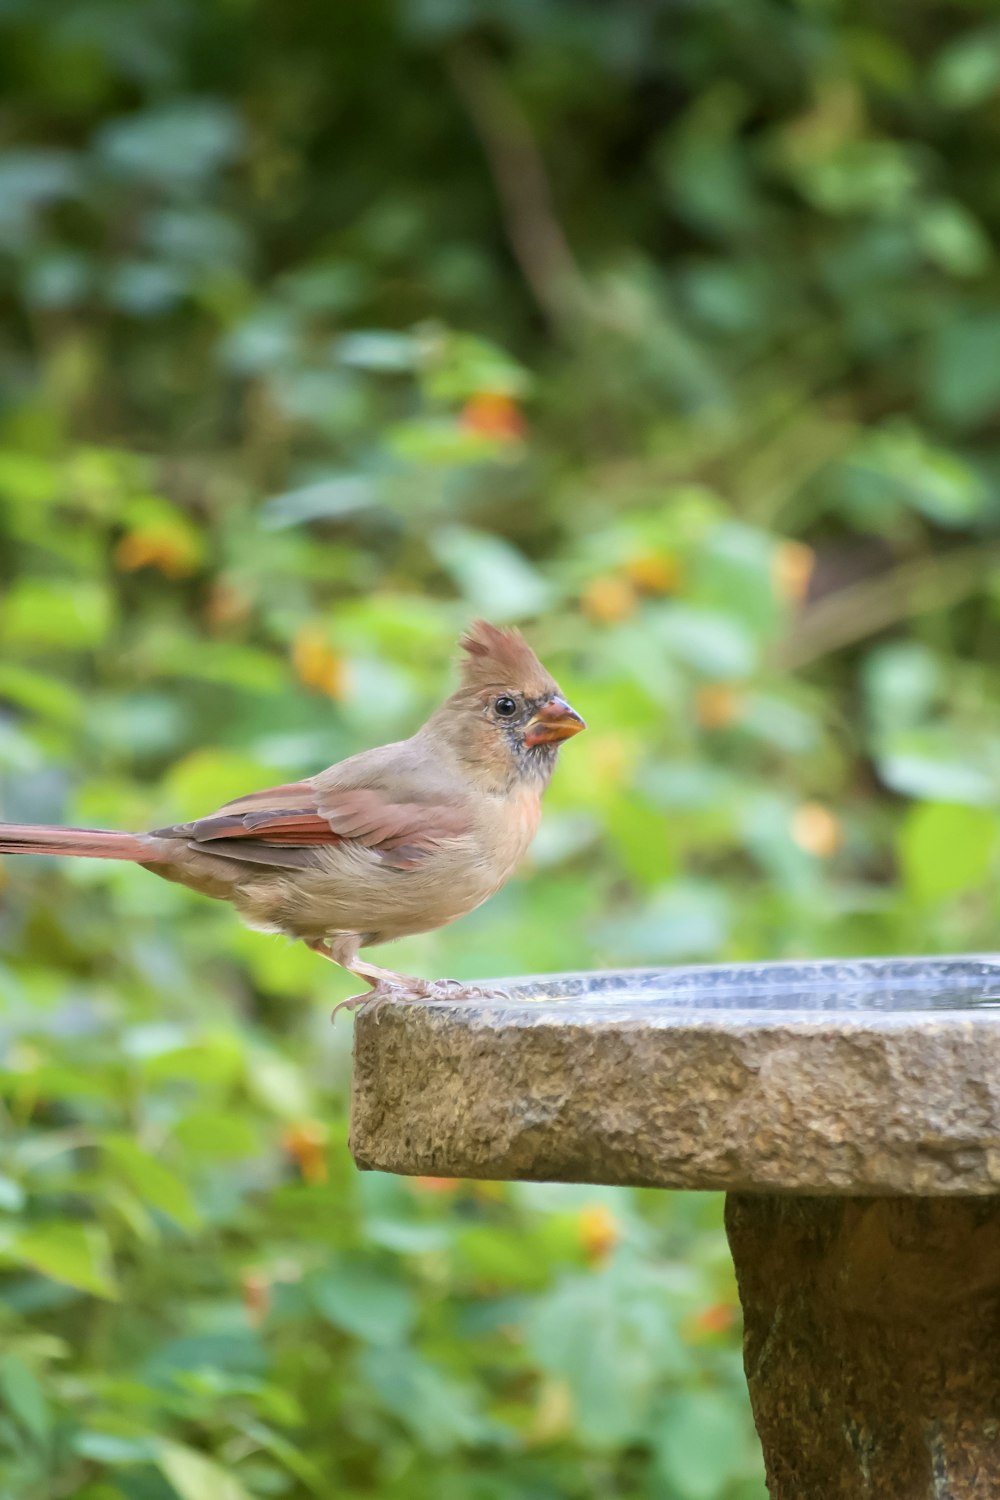 a bird standing on a wood post